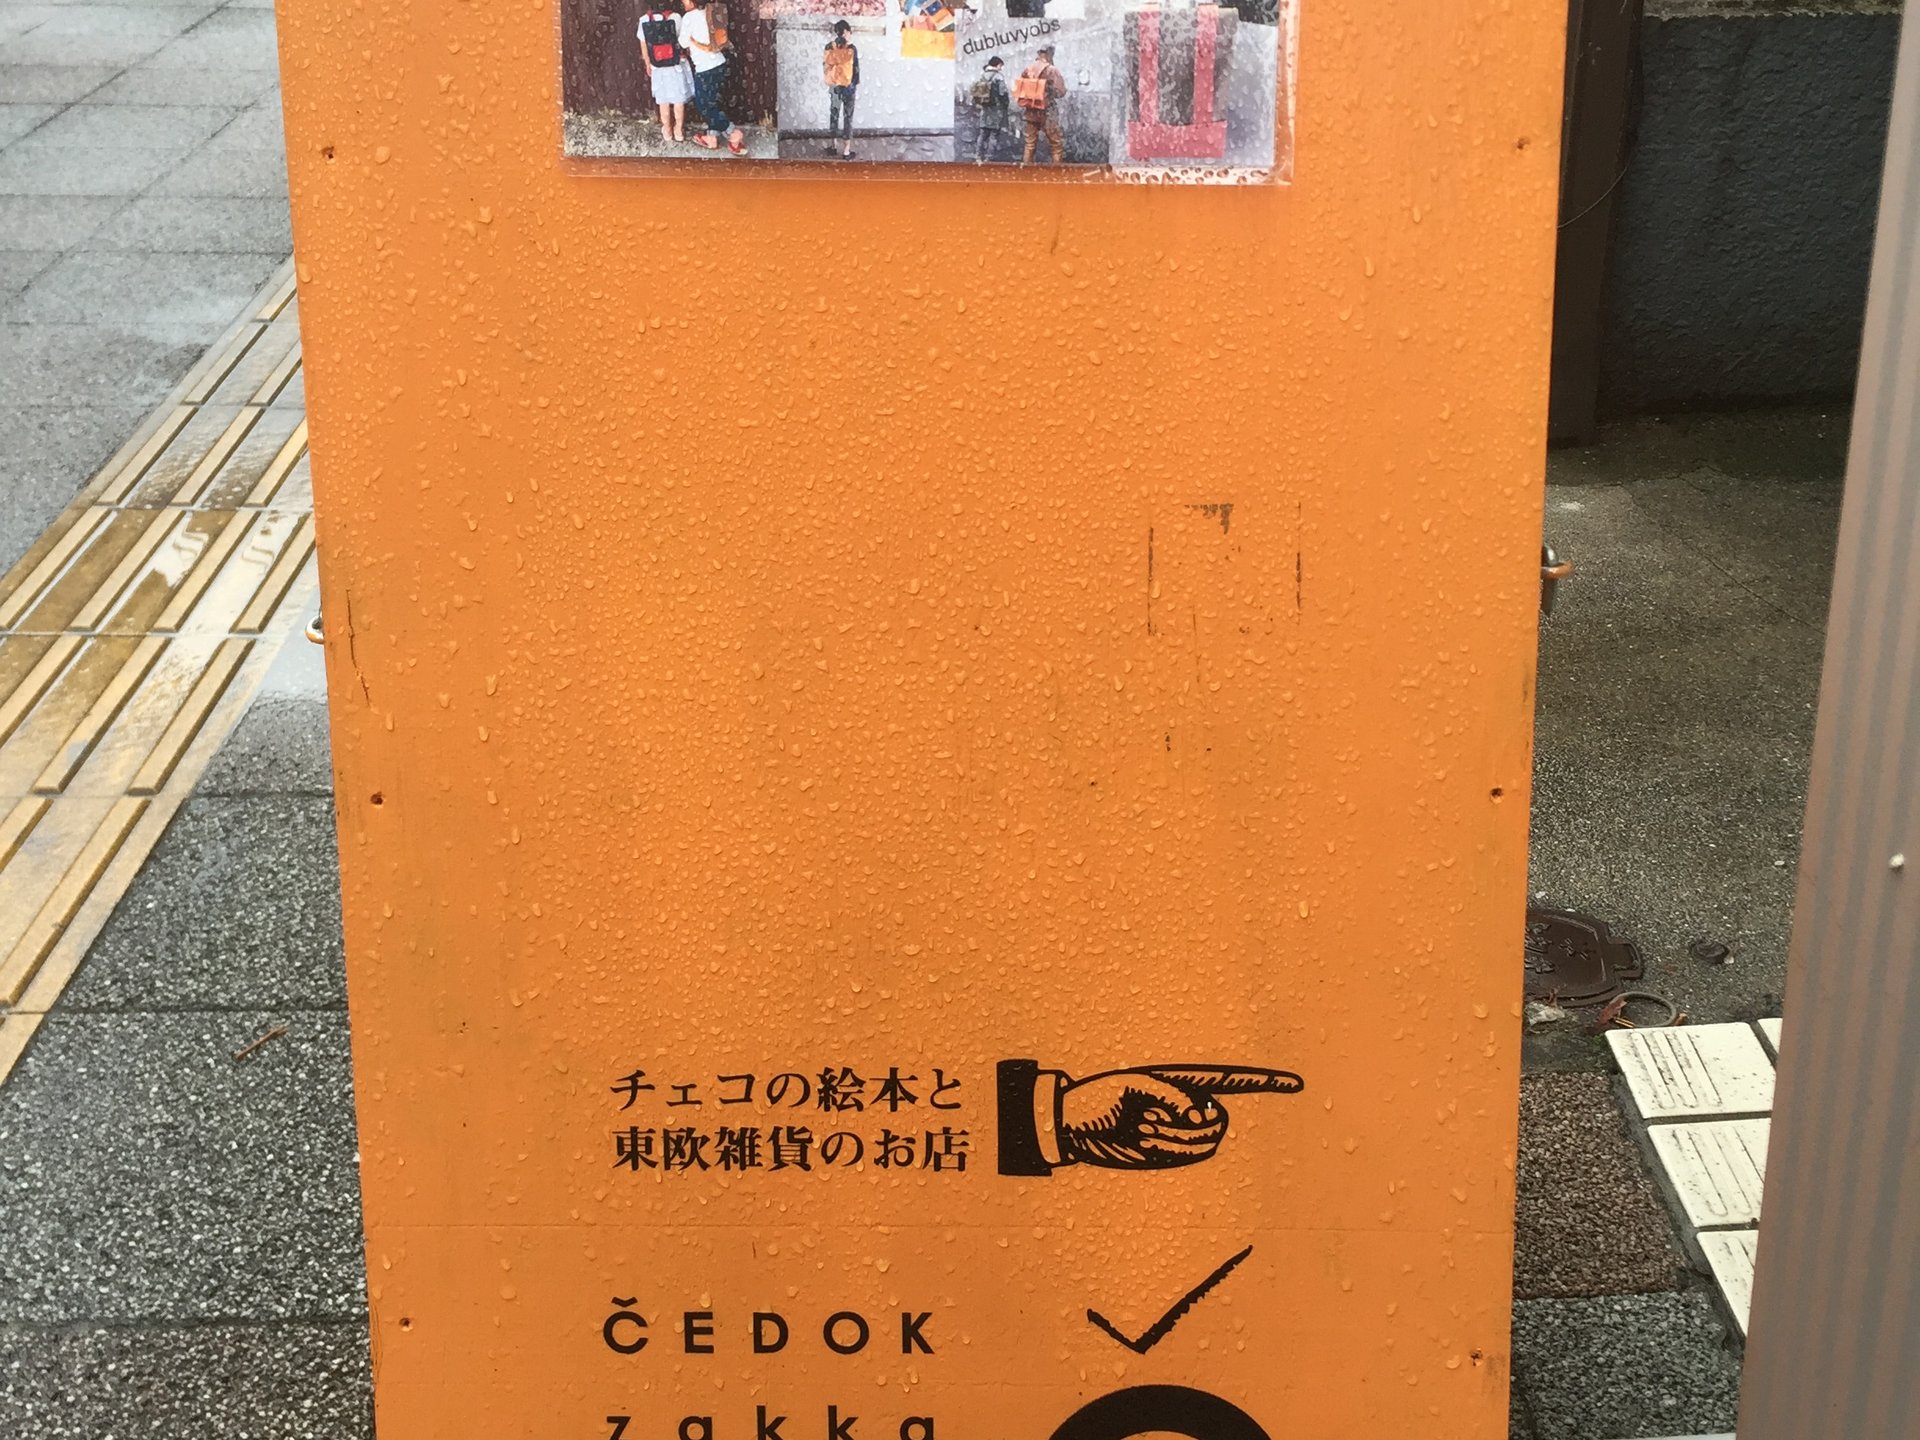 CEDOK zakkastore (チェドックザッカストア)